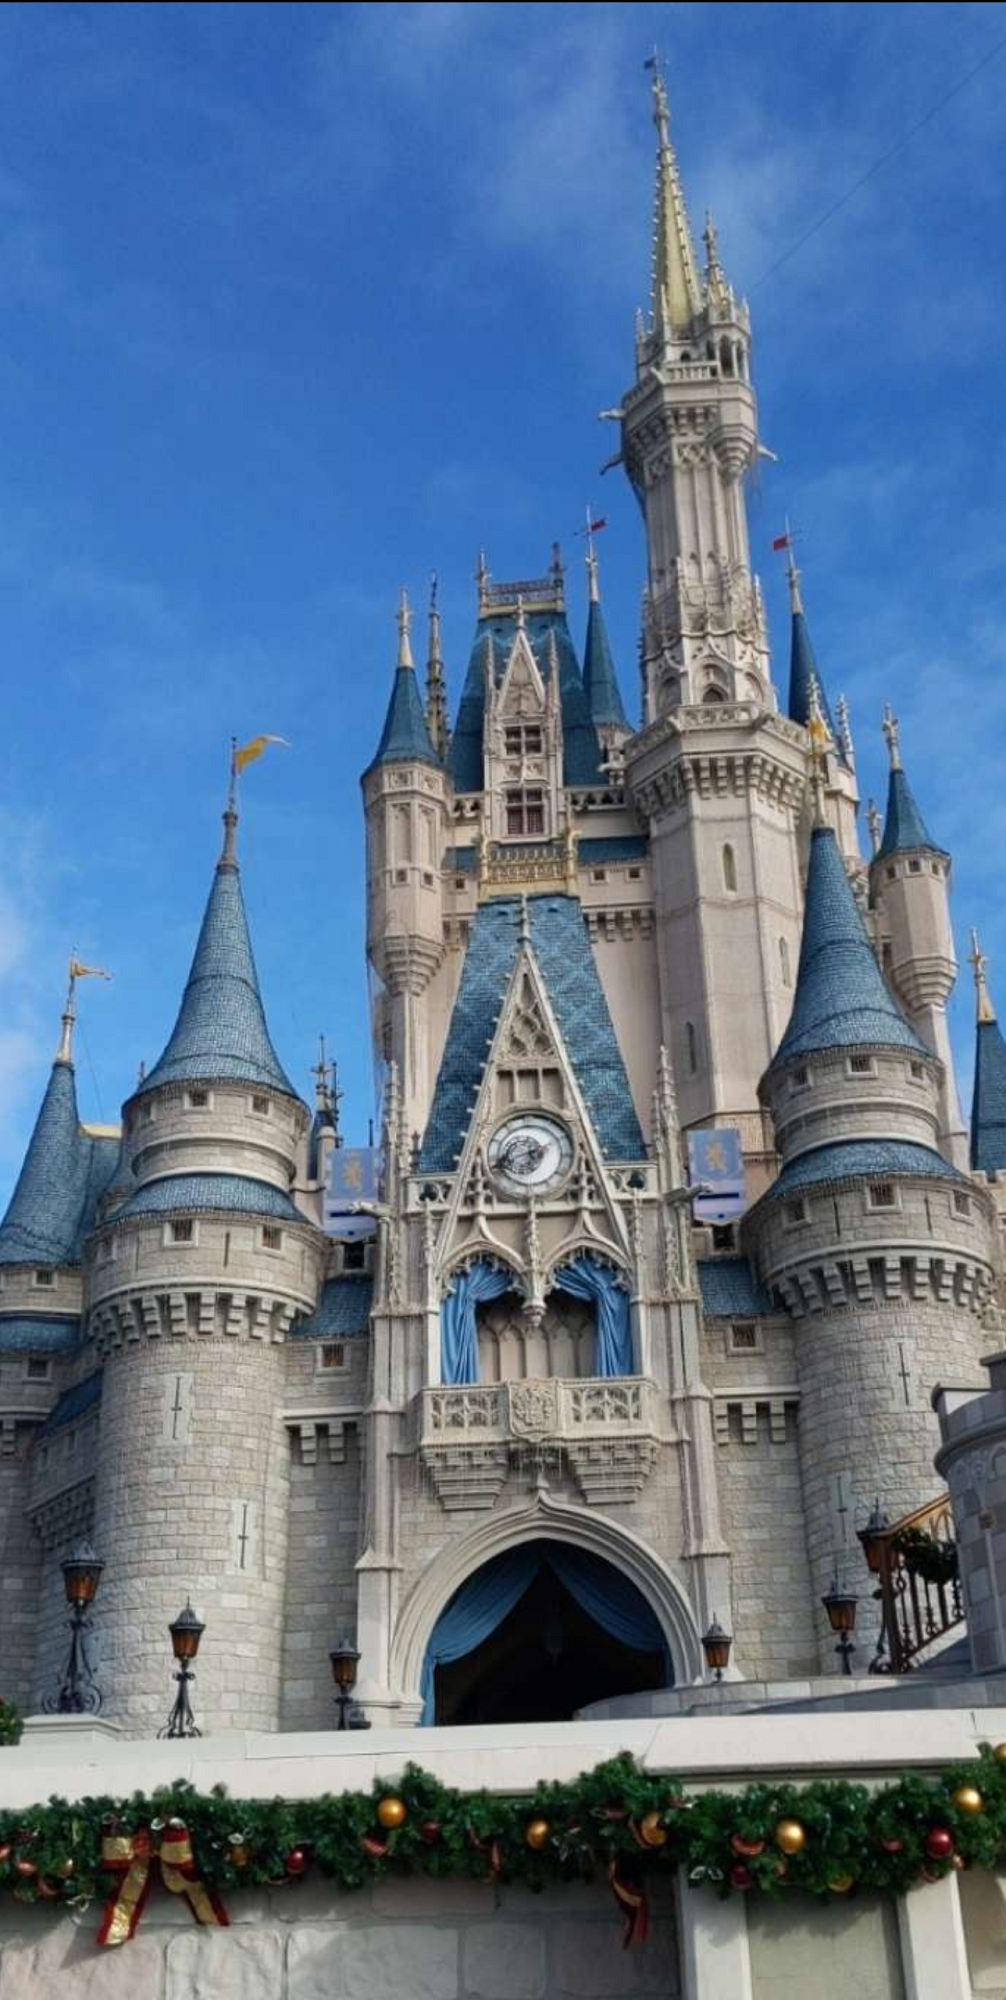 Disney Princess Meeting Returns to MK